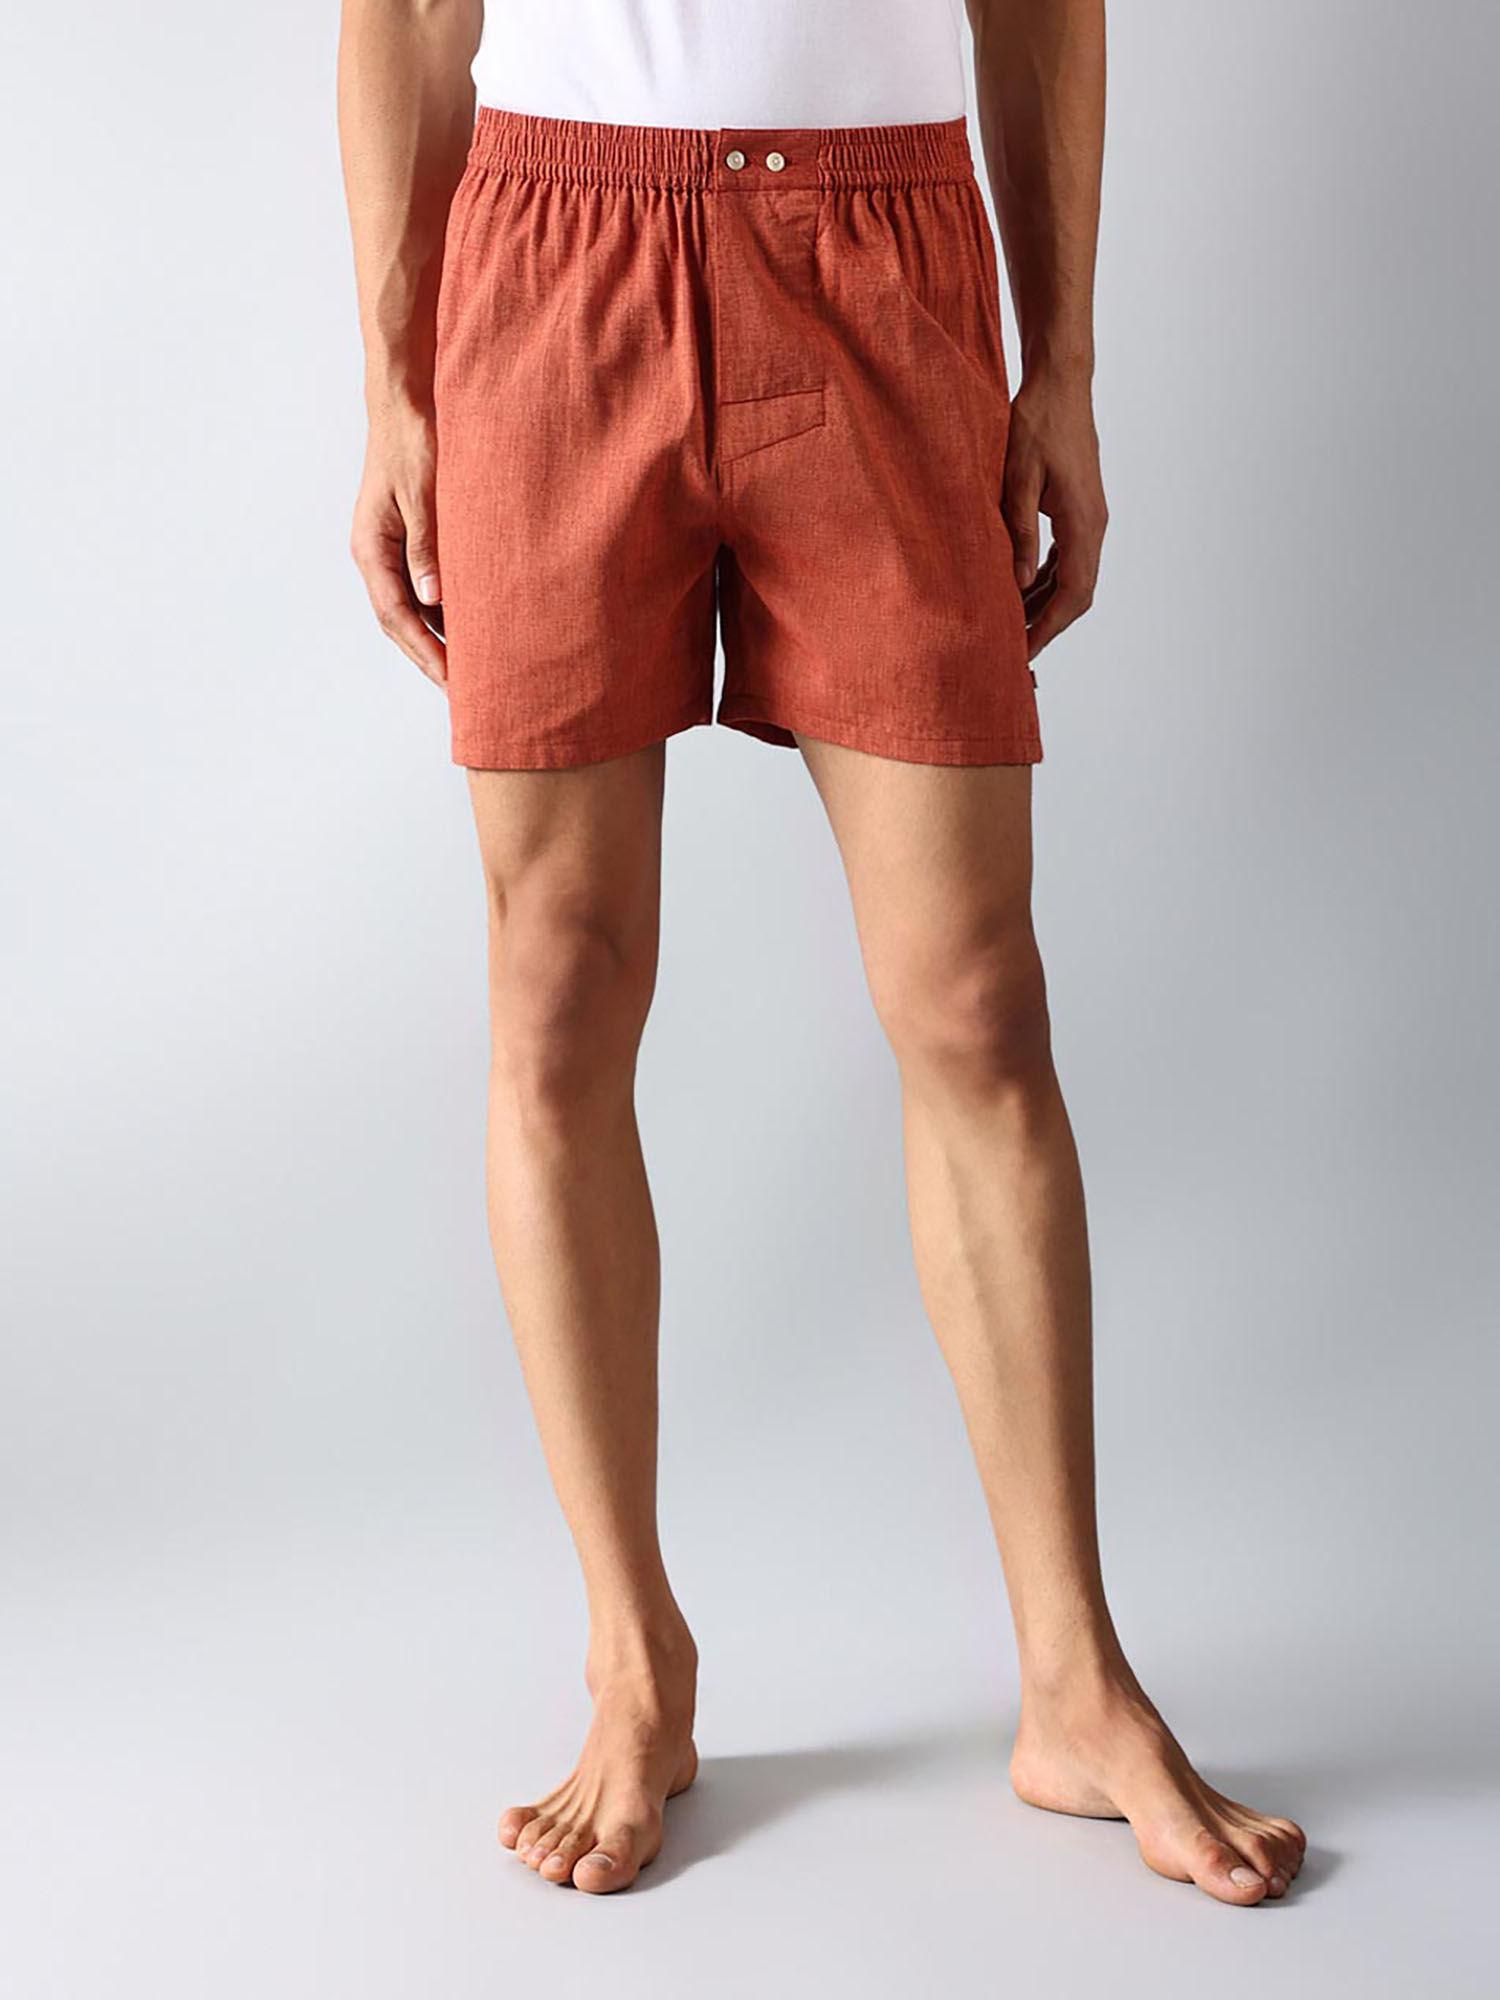 orange cotton boxer shorts